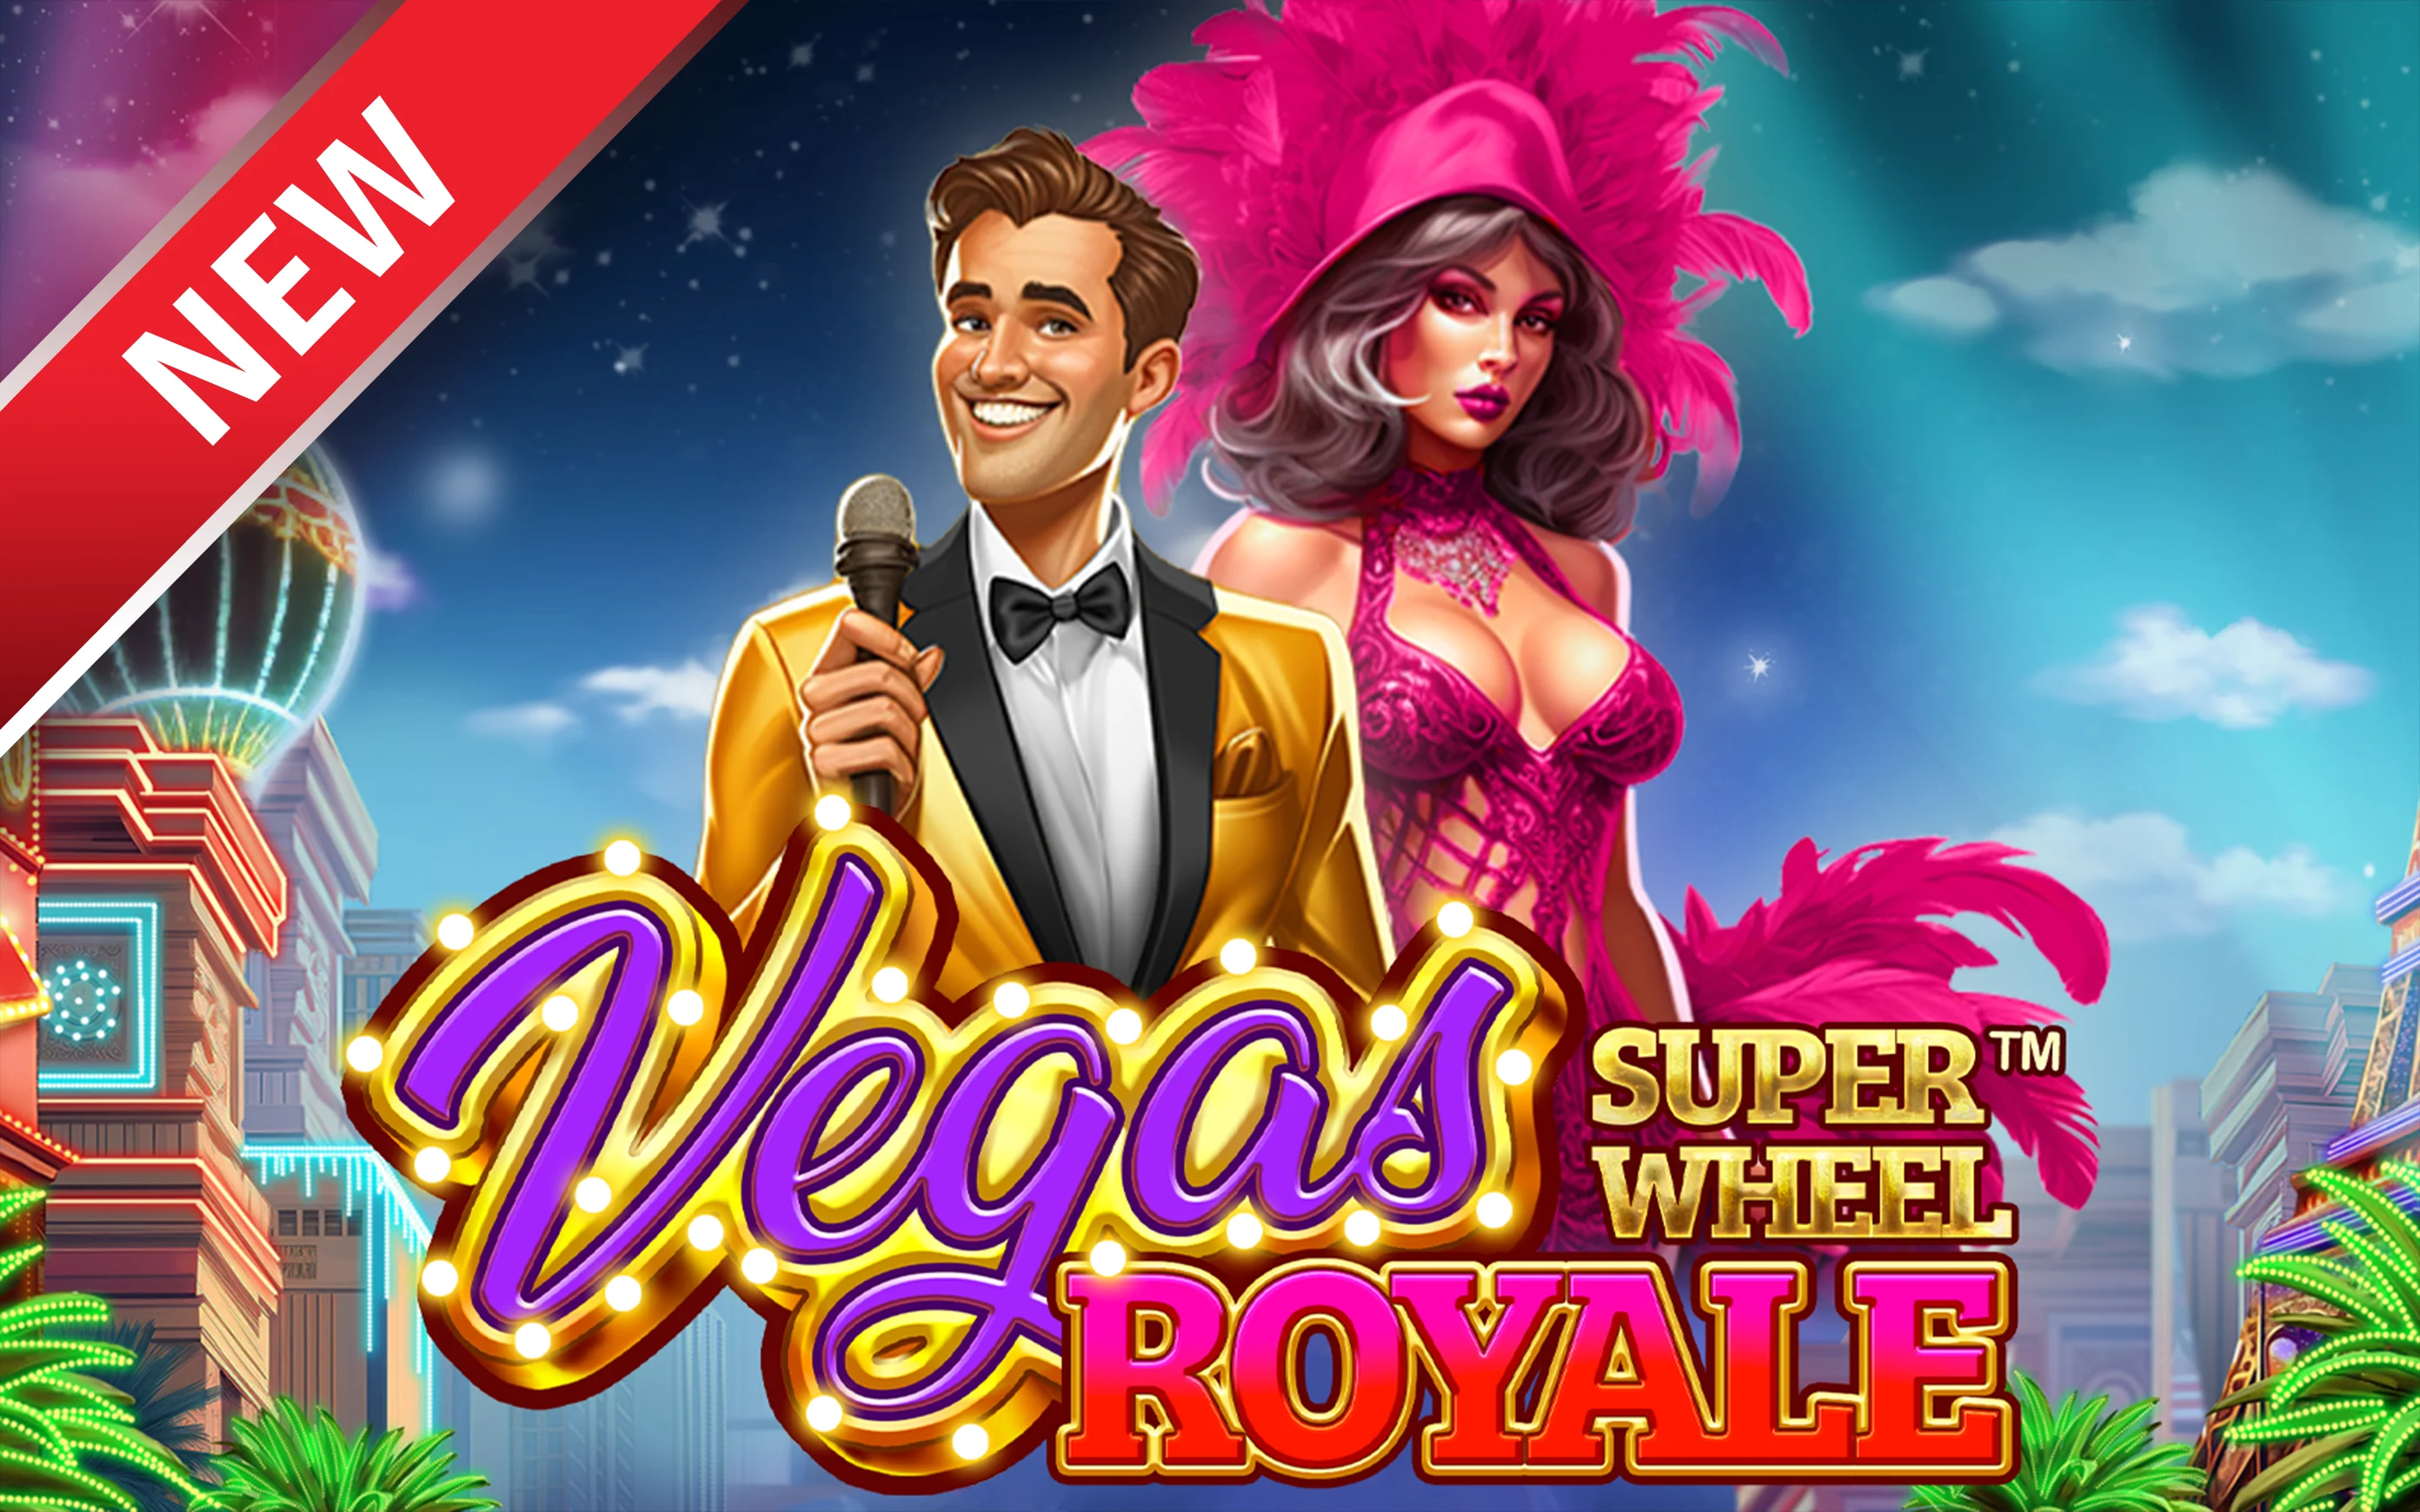 Play Vegas Royale Super Wheel™ on Starcasino.be online casino